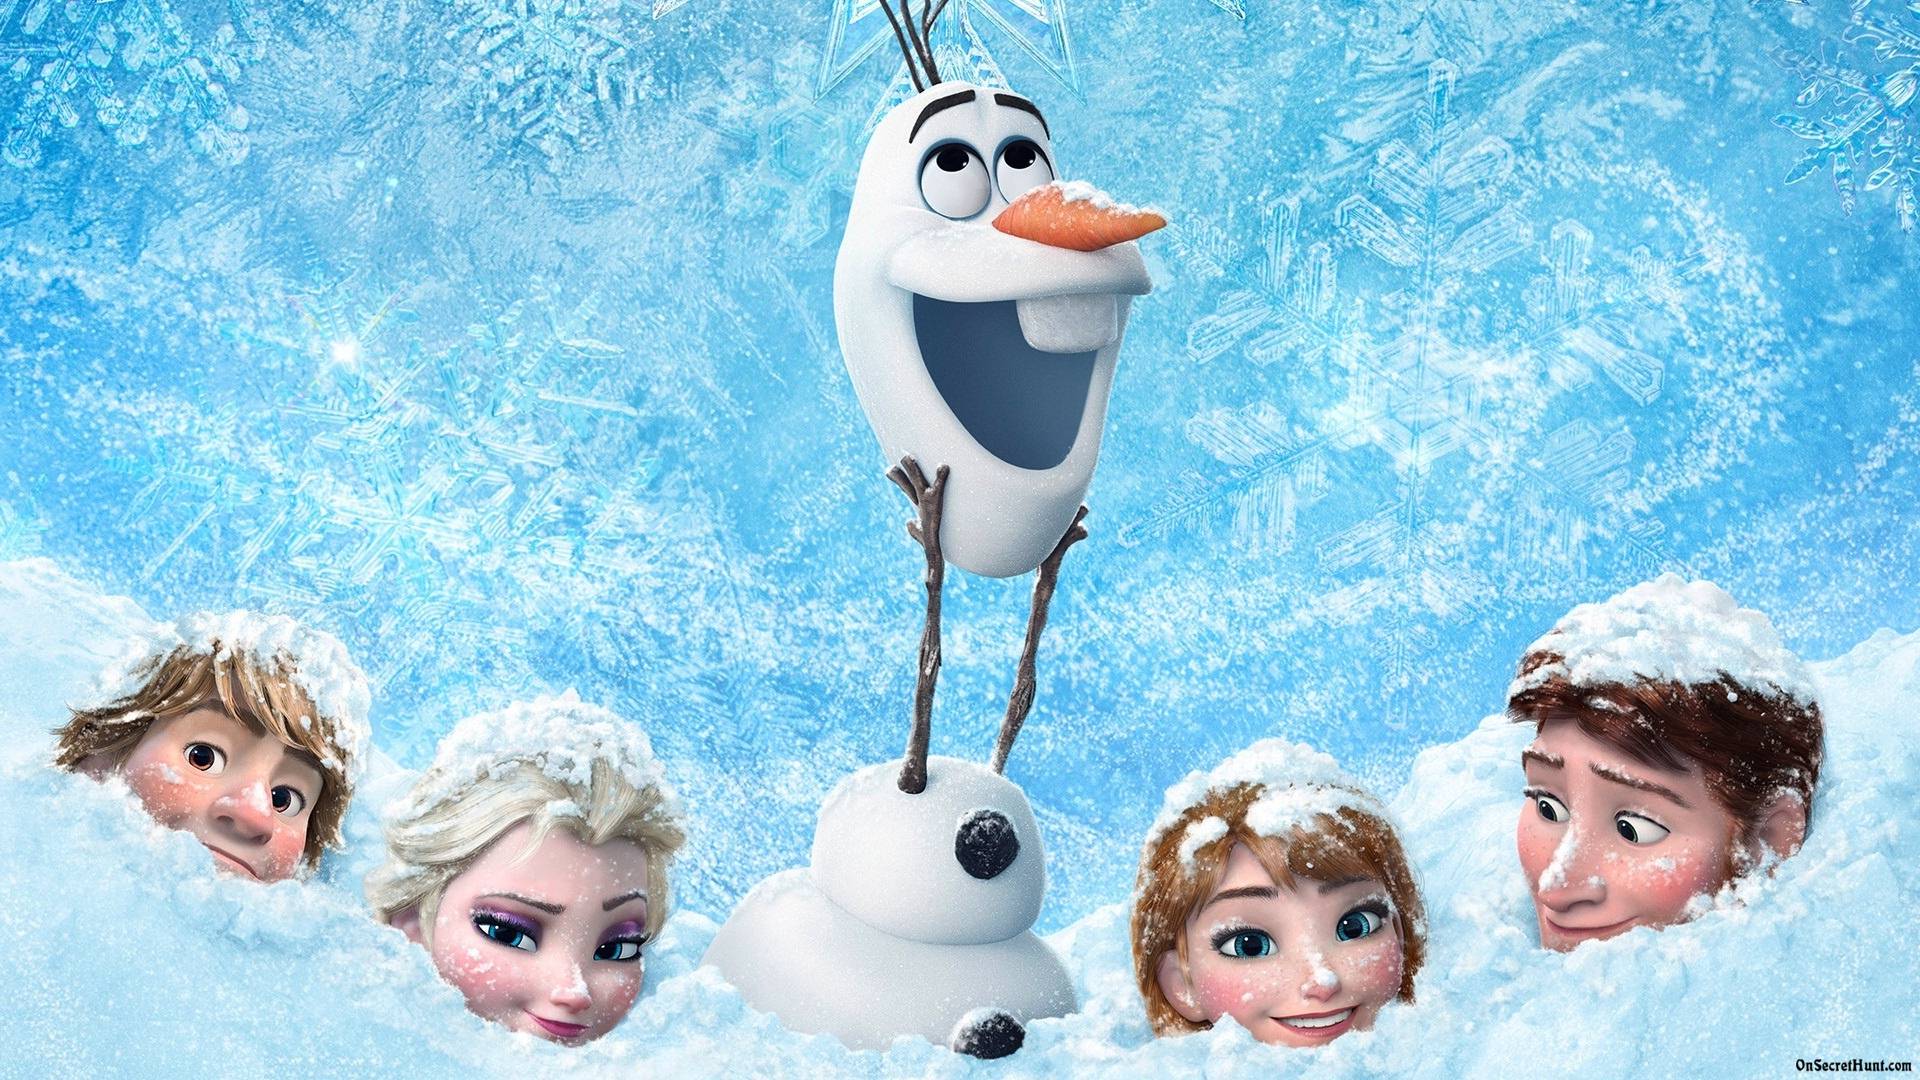 Top HD Frozen Movie Wallpaper. Cartoons HD.27 KB